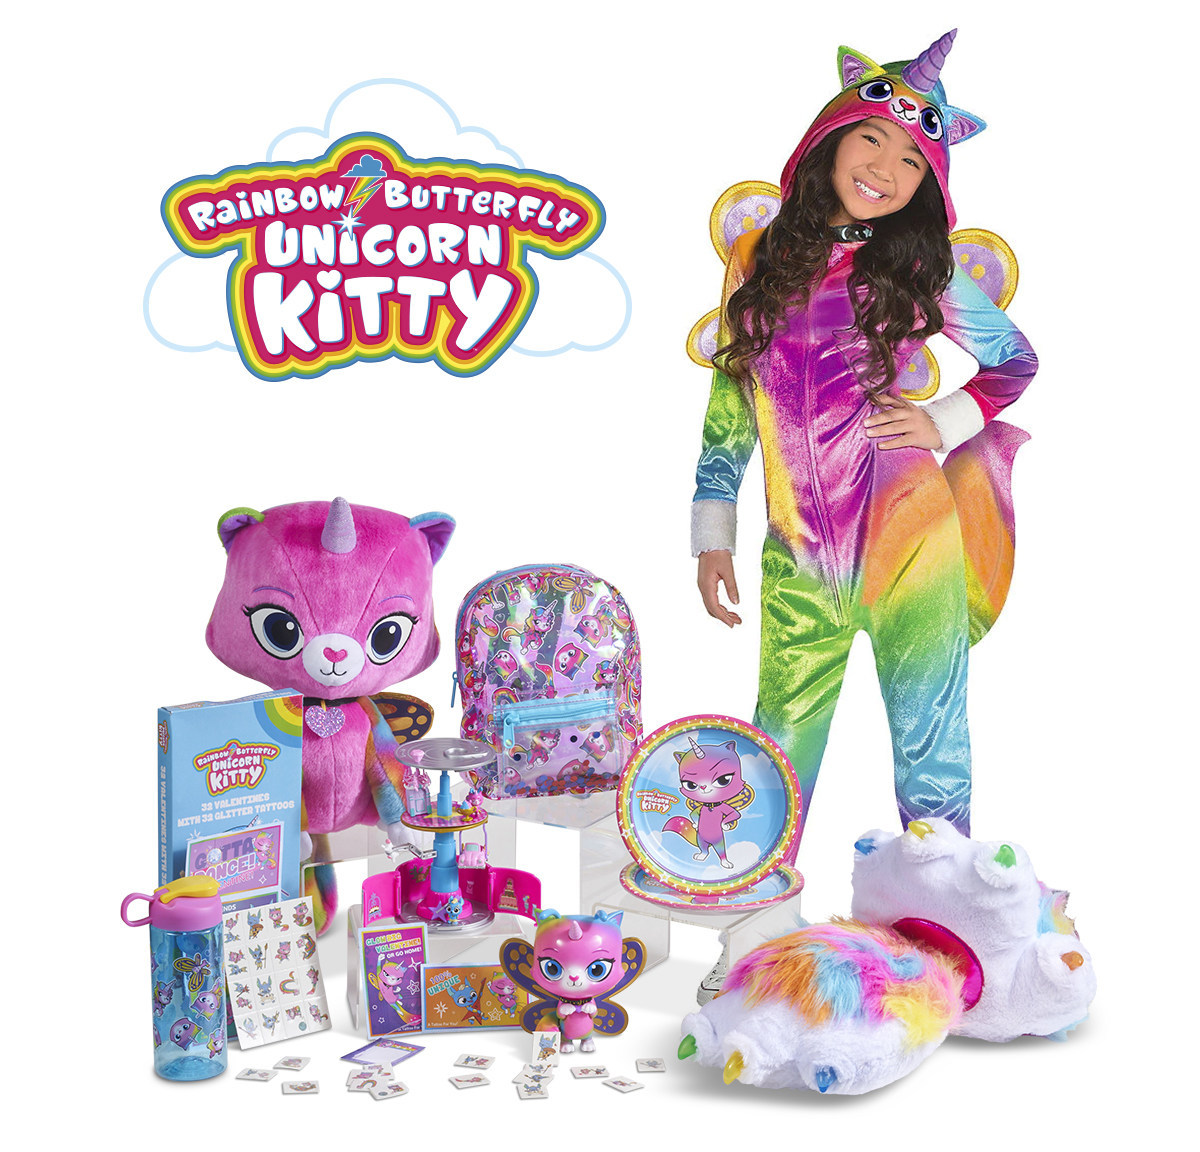 https://2.bp.blogspot.com/-7YeslvtcoY4/XPbQVqnuPNI/AAAAAAABHd8/DbtY_MeF7sEEhMlDZMXi_151gmQe02hhQCLcBGAs/s1600/rainbow-butterfly-unicorn-kitty-merchandise-toys-costume-consumer-products-funrise-nickelodeon-nick-rbuk-press.jpg